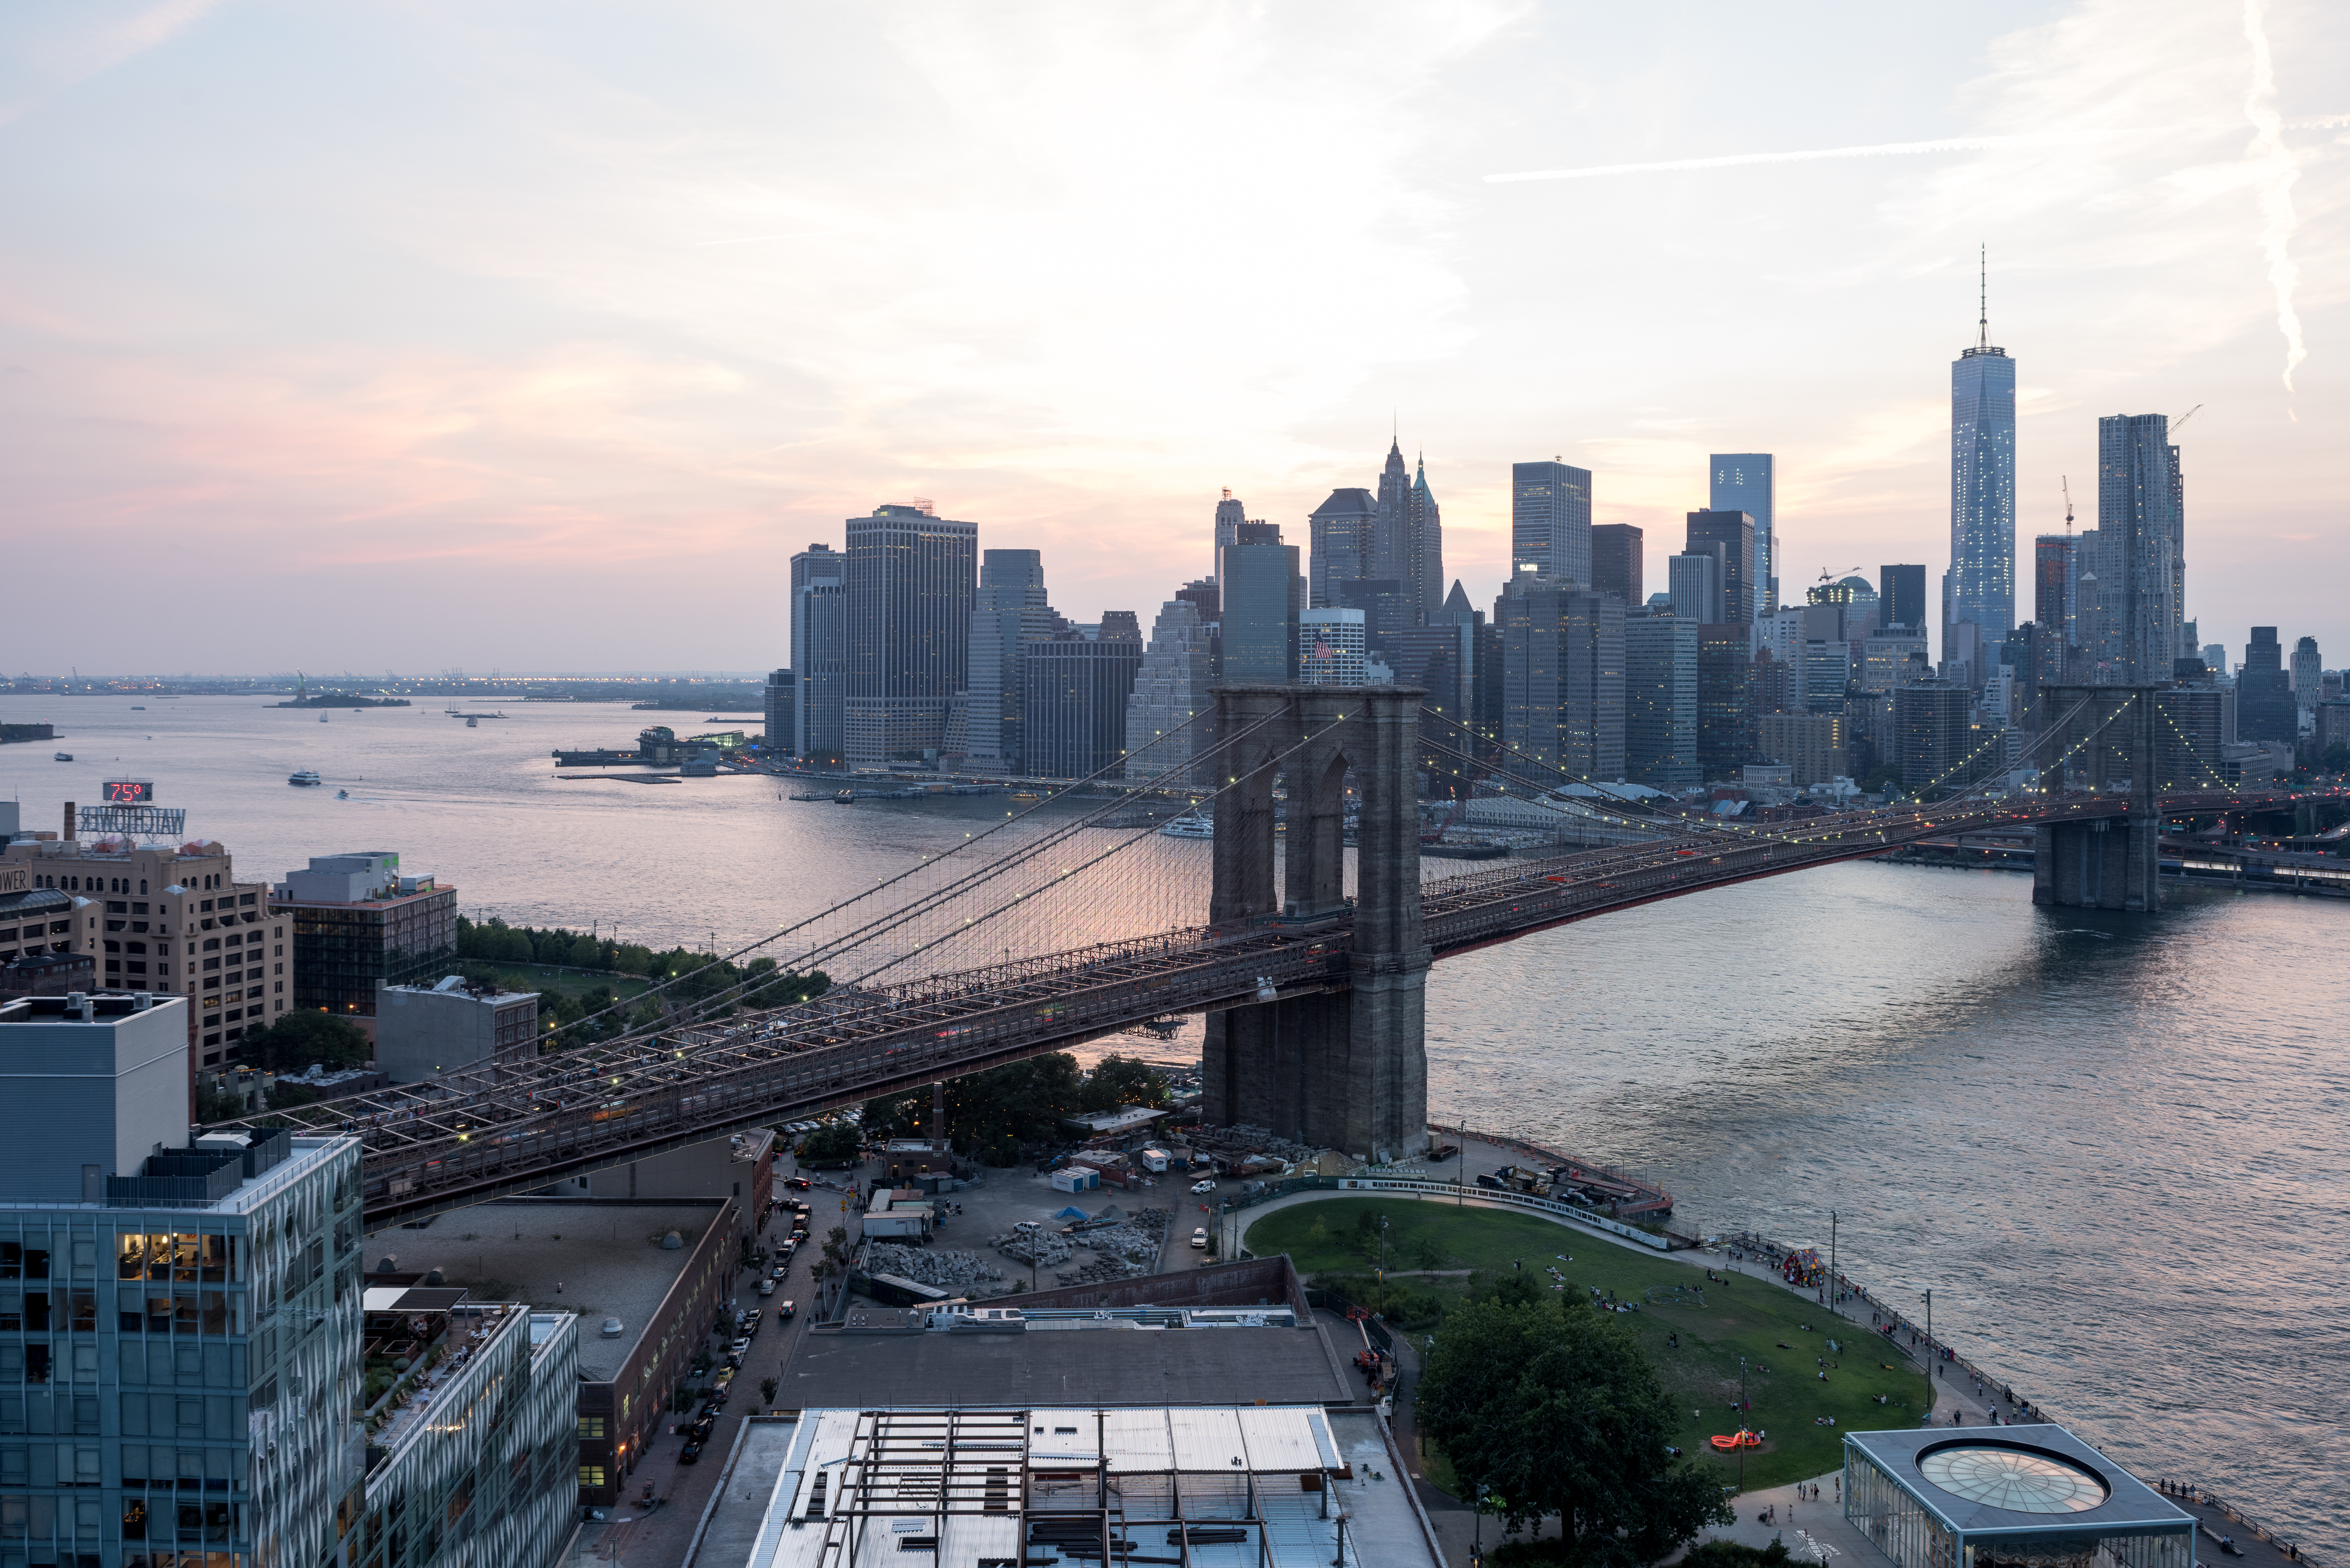 Sunset view of Brooklyn Bridge and New York City